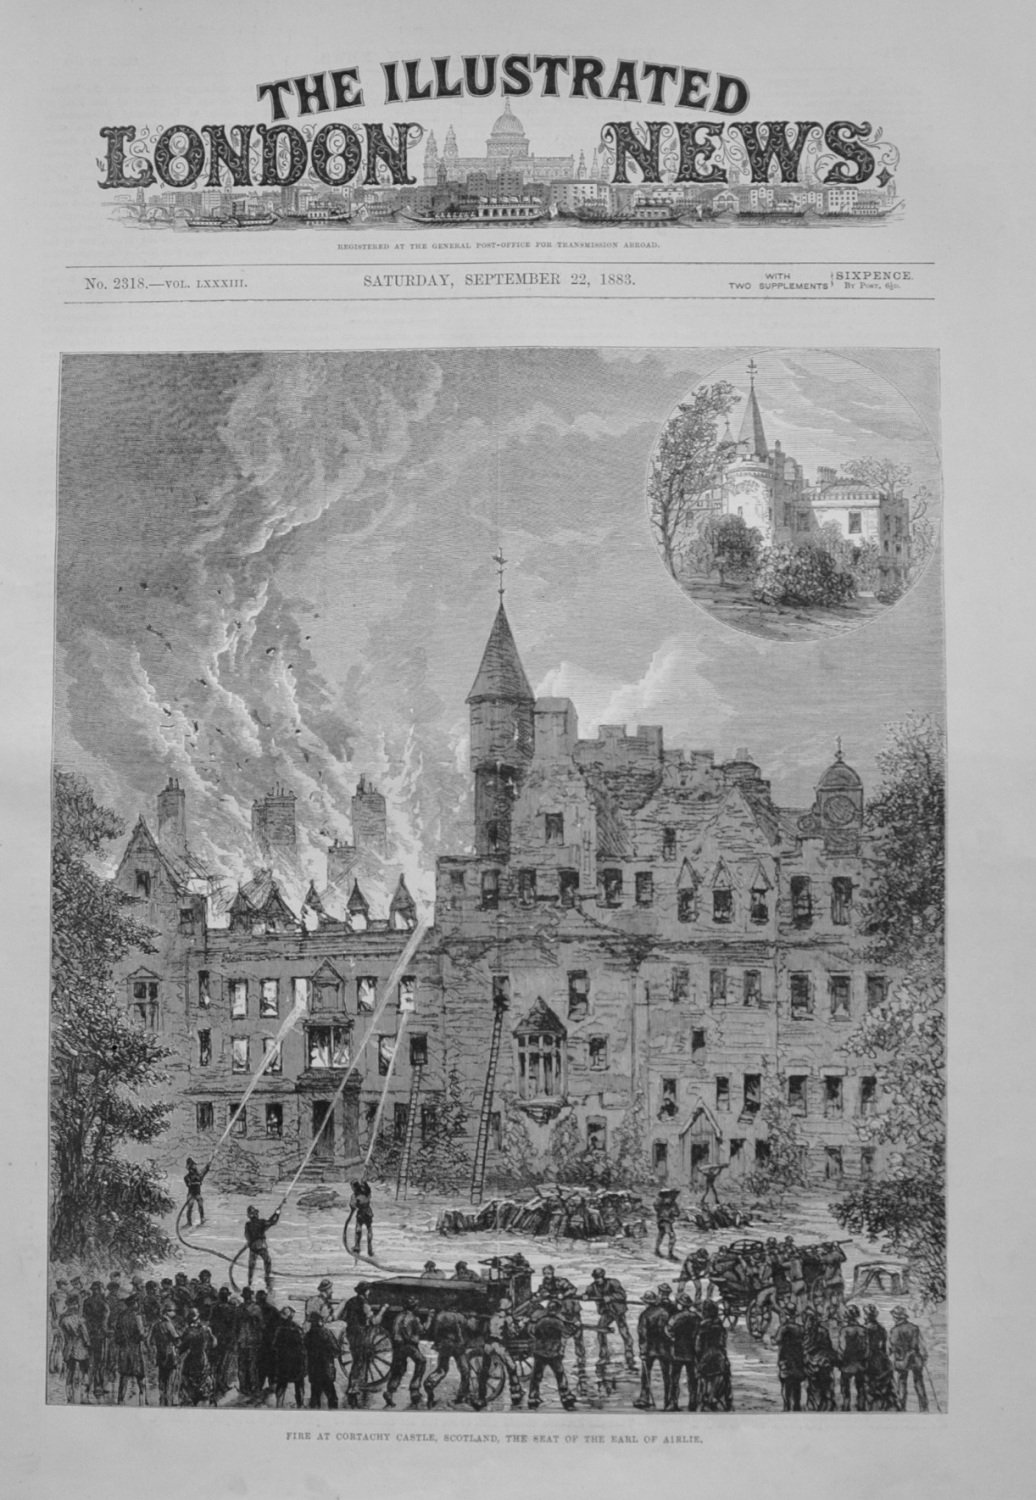 Fire at Cortachy Castle - 1883